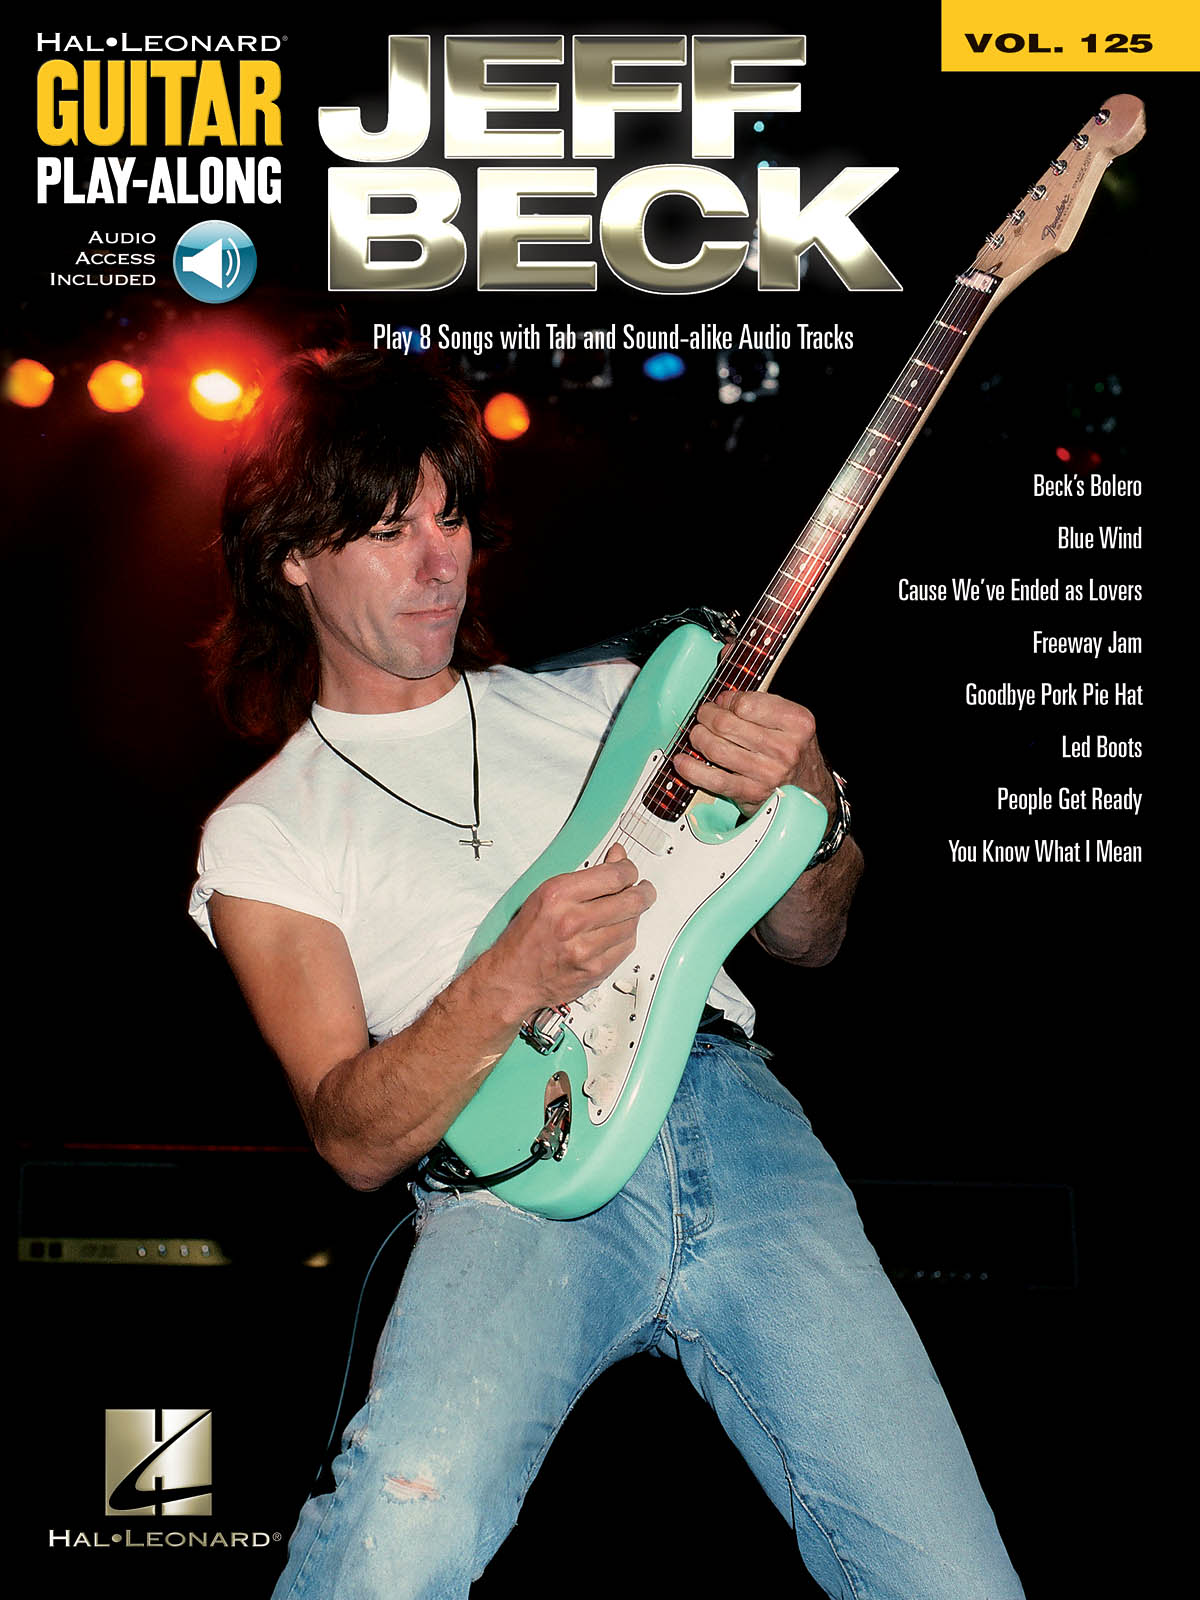 Beck's Bolero by Jeff Beck - Guitar Ensemble - Guitar Instructor